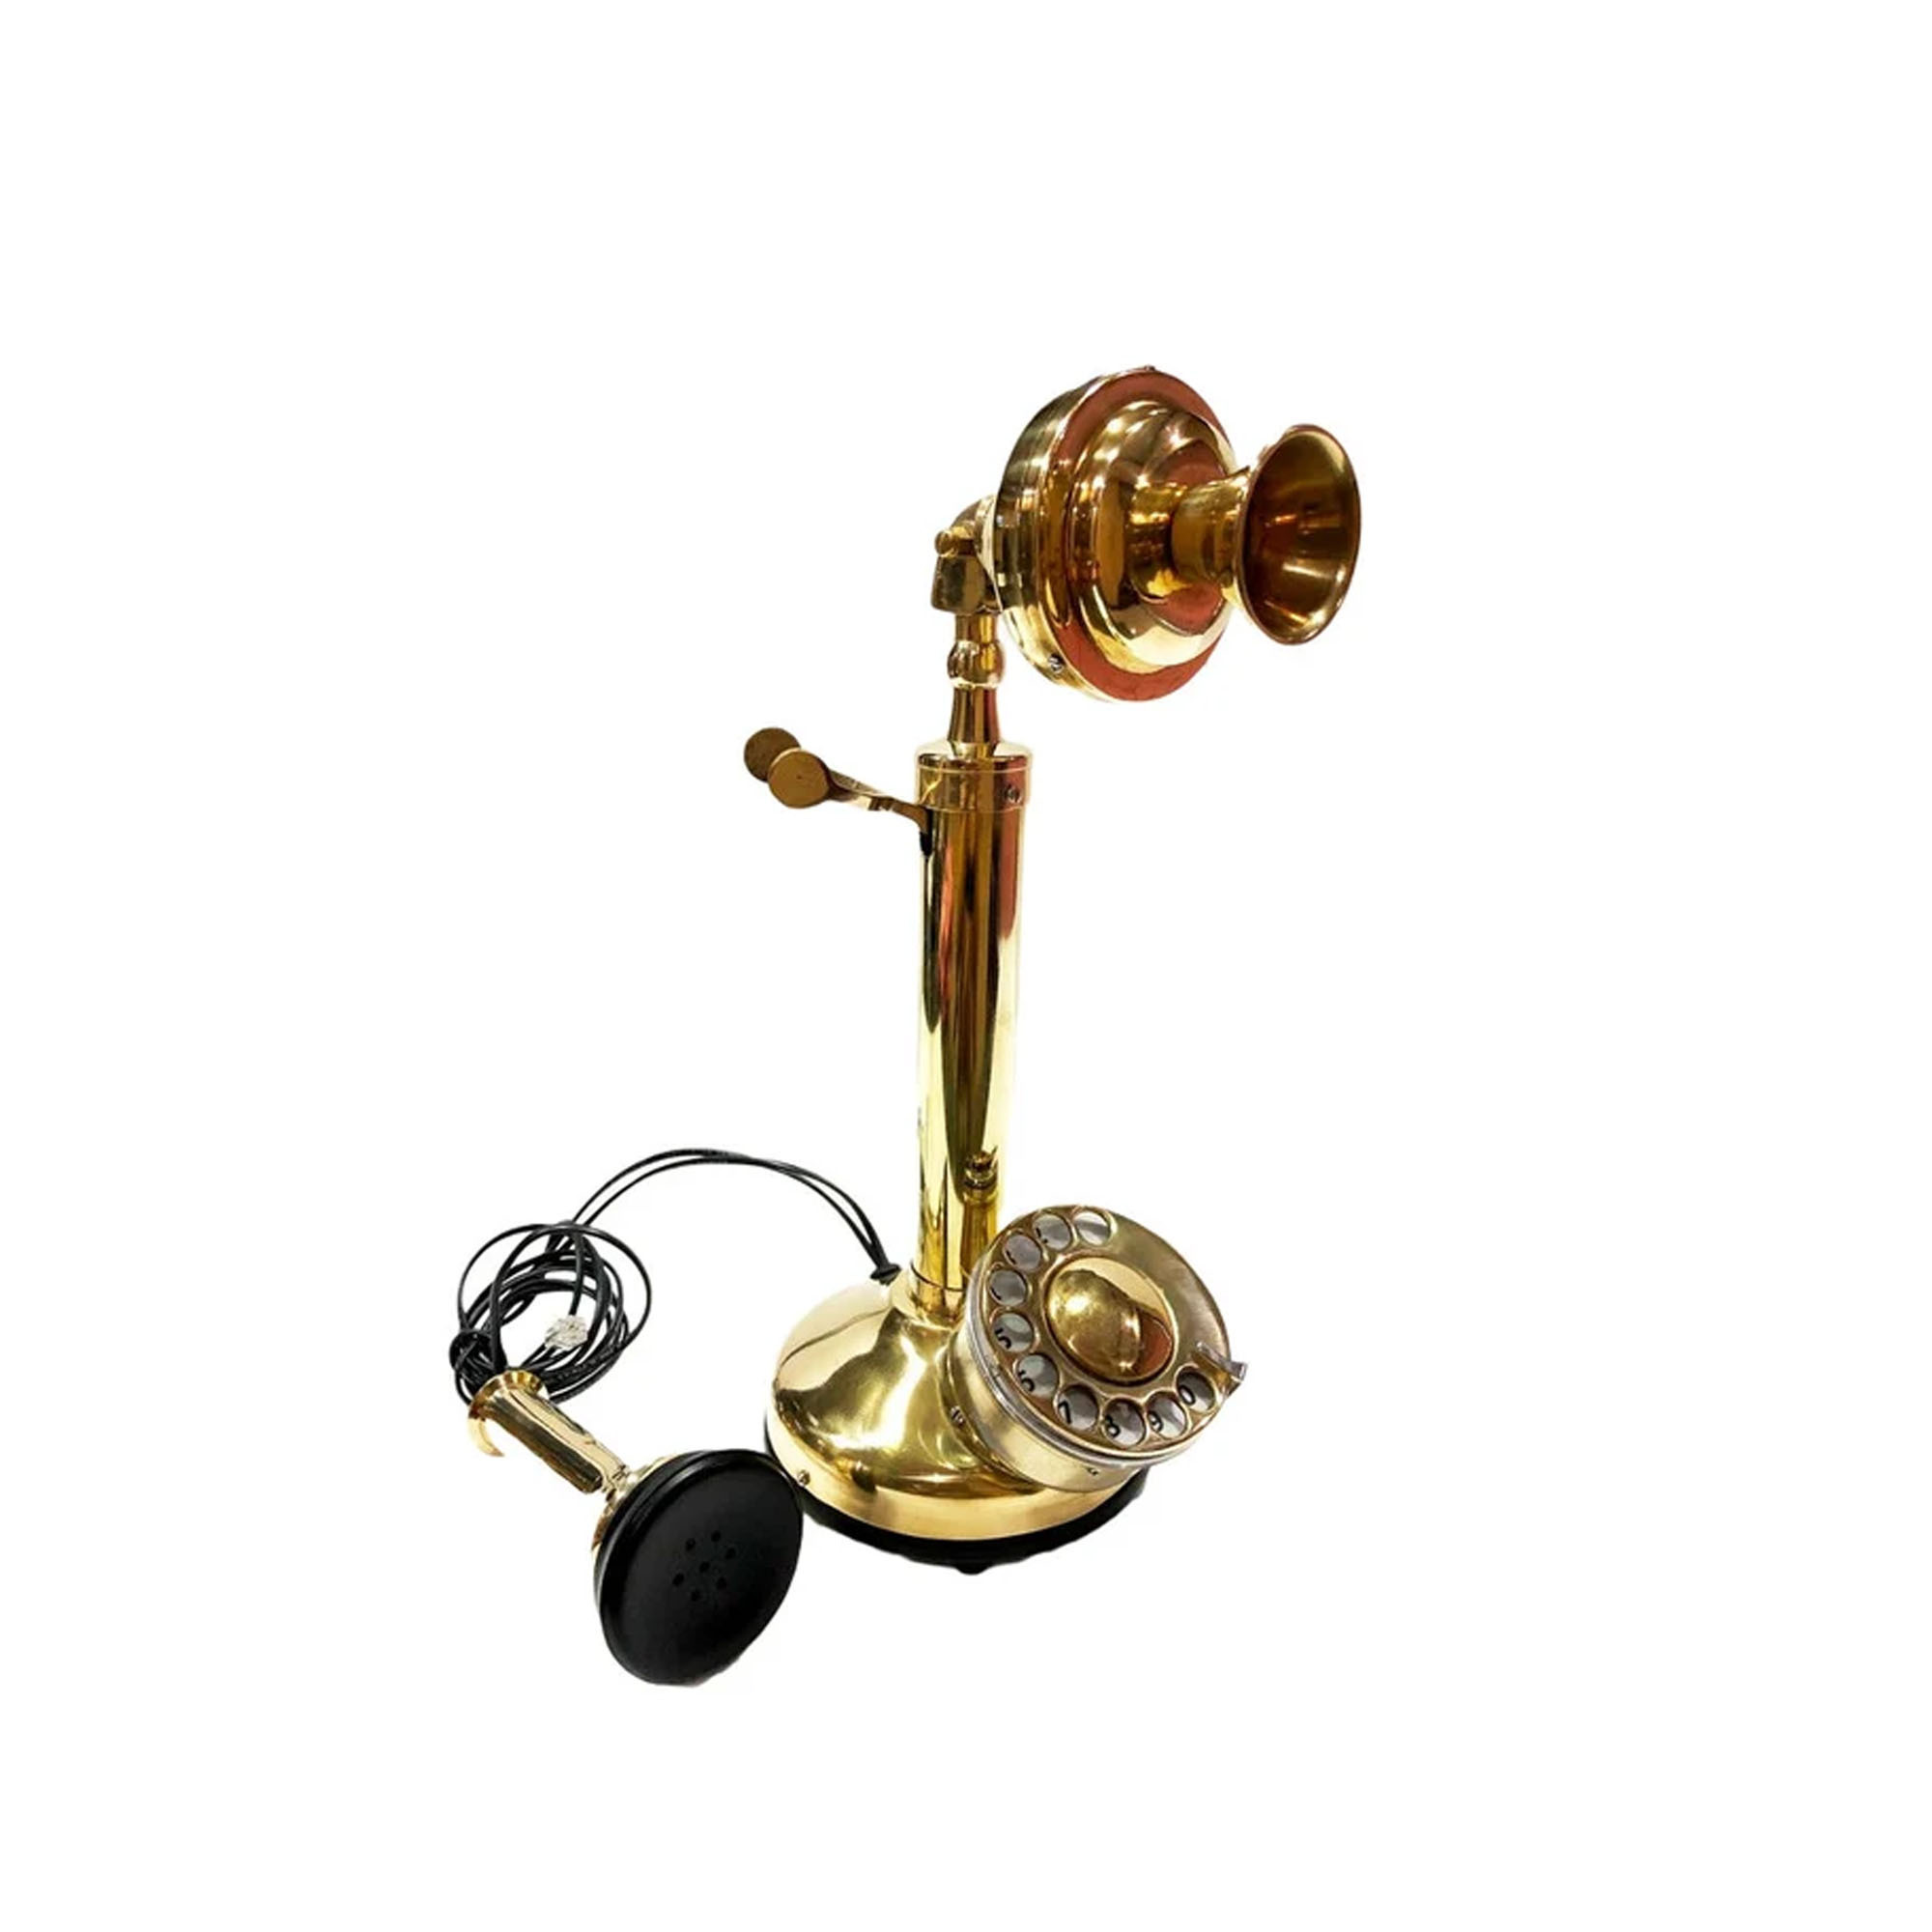 Brass Stylish Telephone Brass Shiny finish vintage candlestic Beautiful Nautical Solid Brass Rotary Dial Working Telephonek landline Telephone